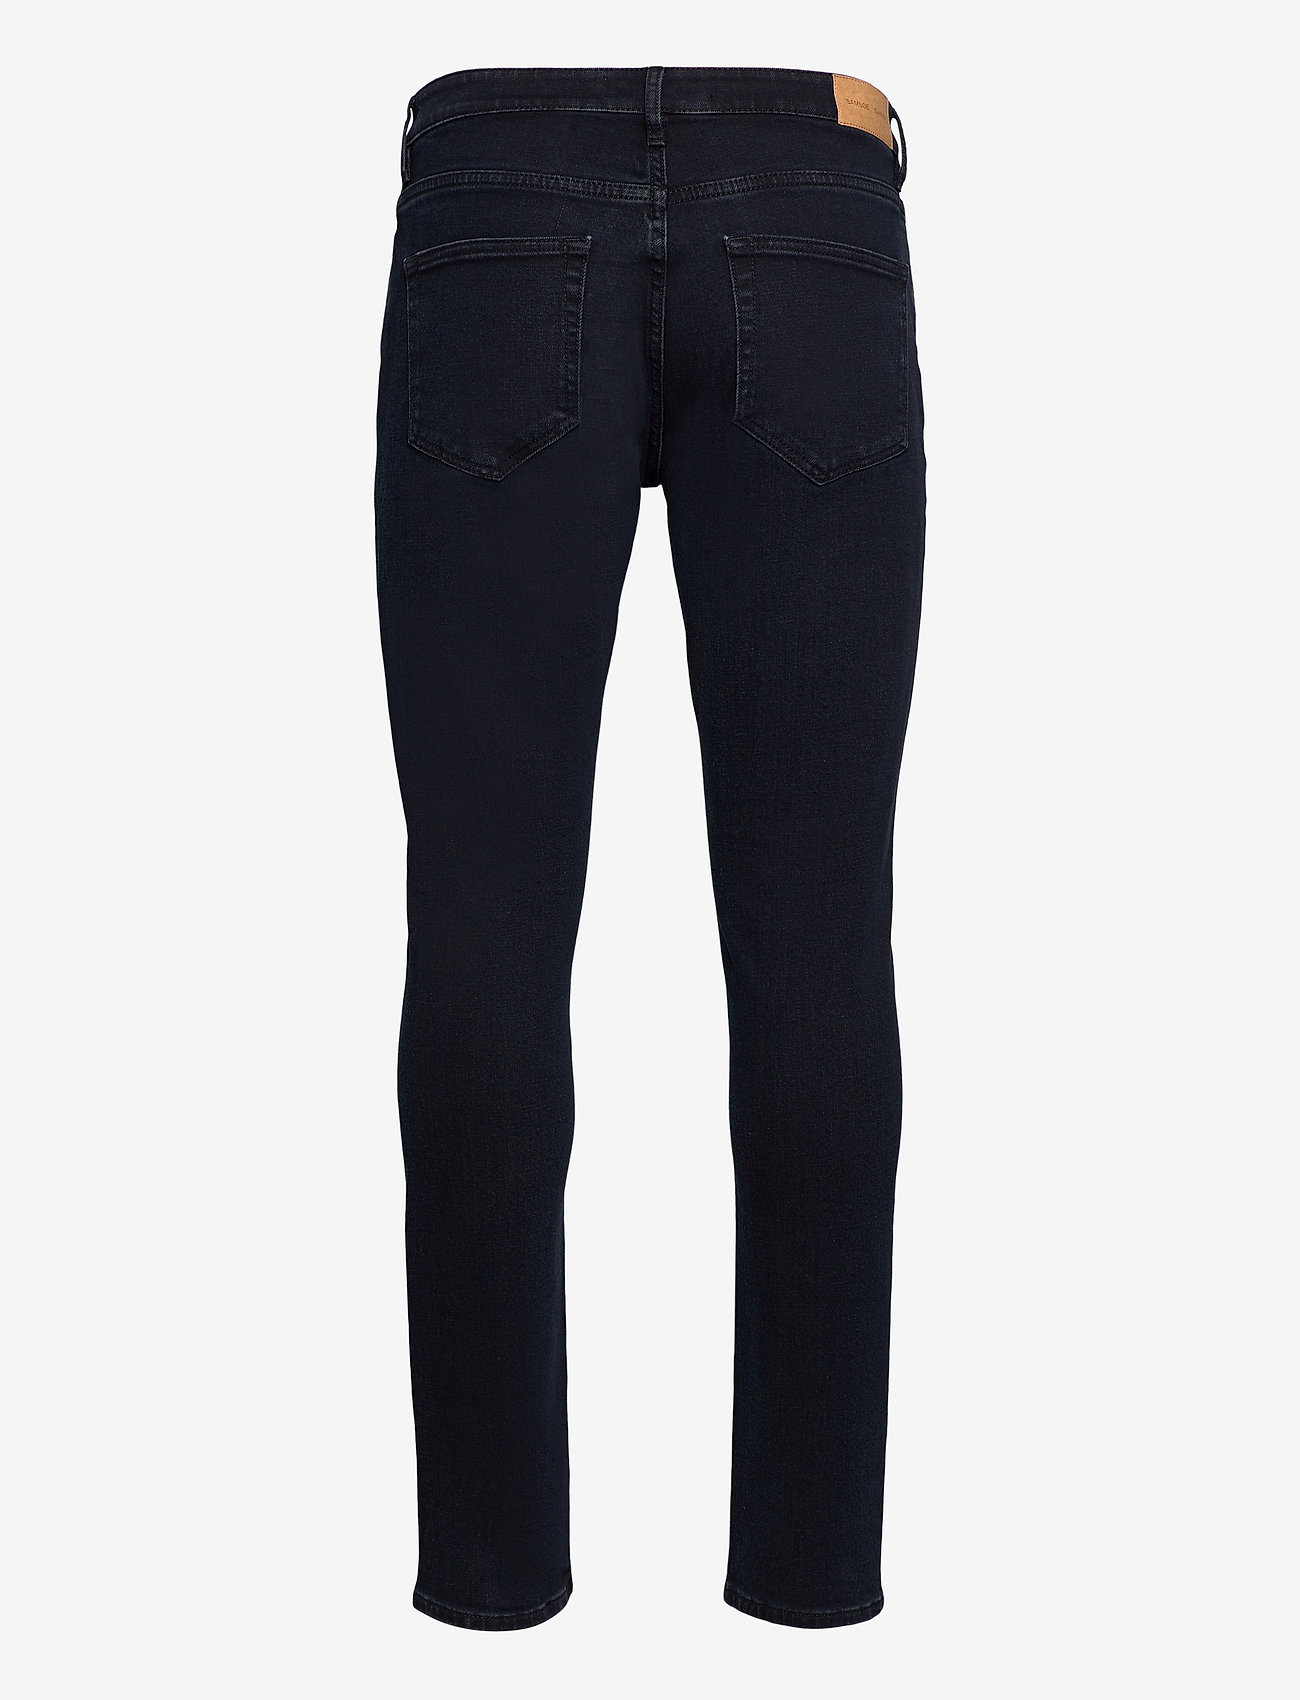 Samsøe Samsøe - Stefan jeans 11352 - slim jeans - midnight - 1